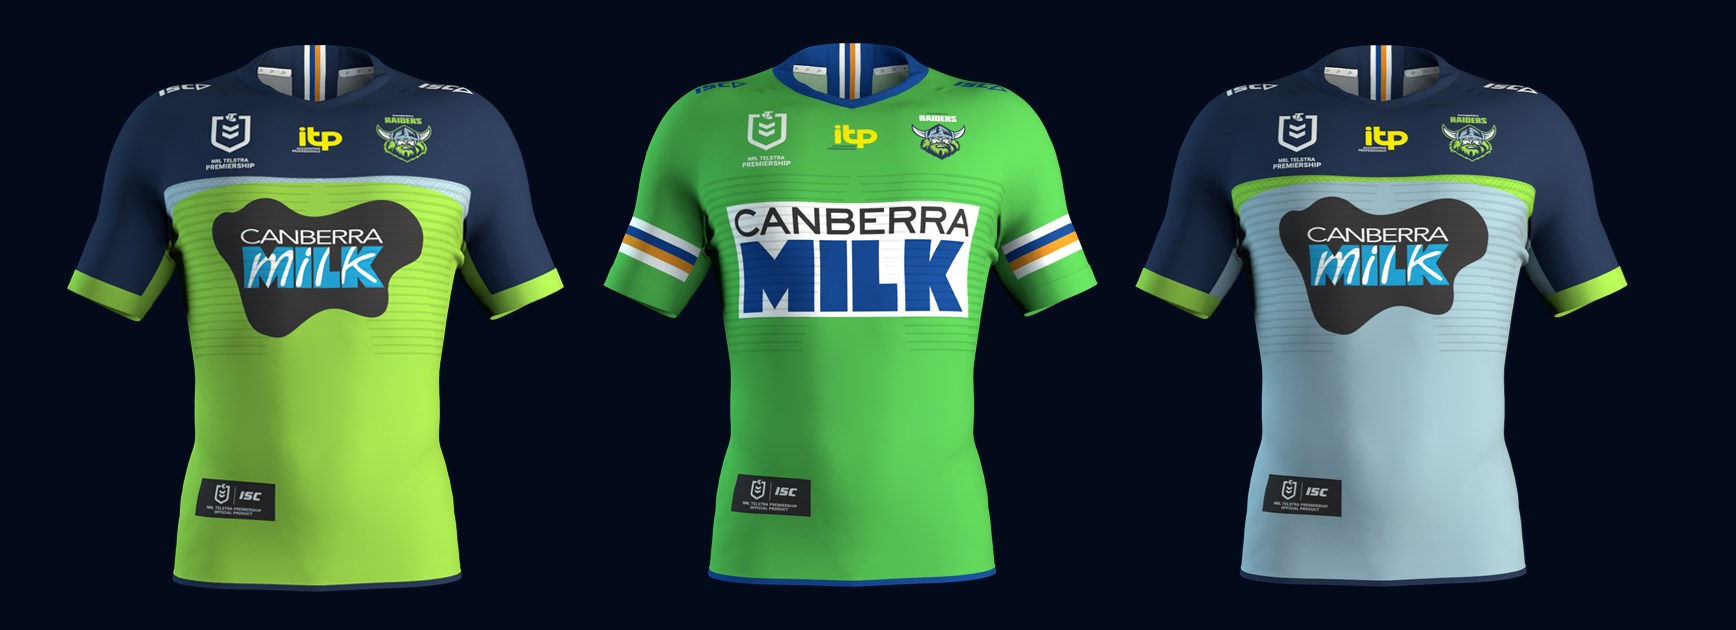 Up The Milk: Canberra Milk Raiders Major Partner in 2021